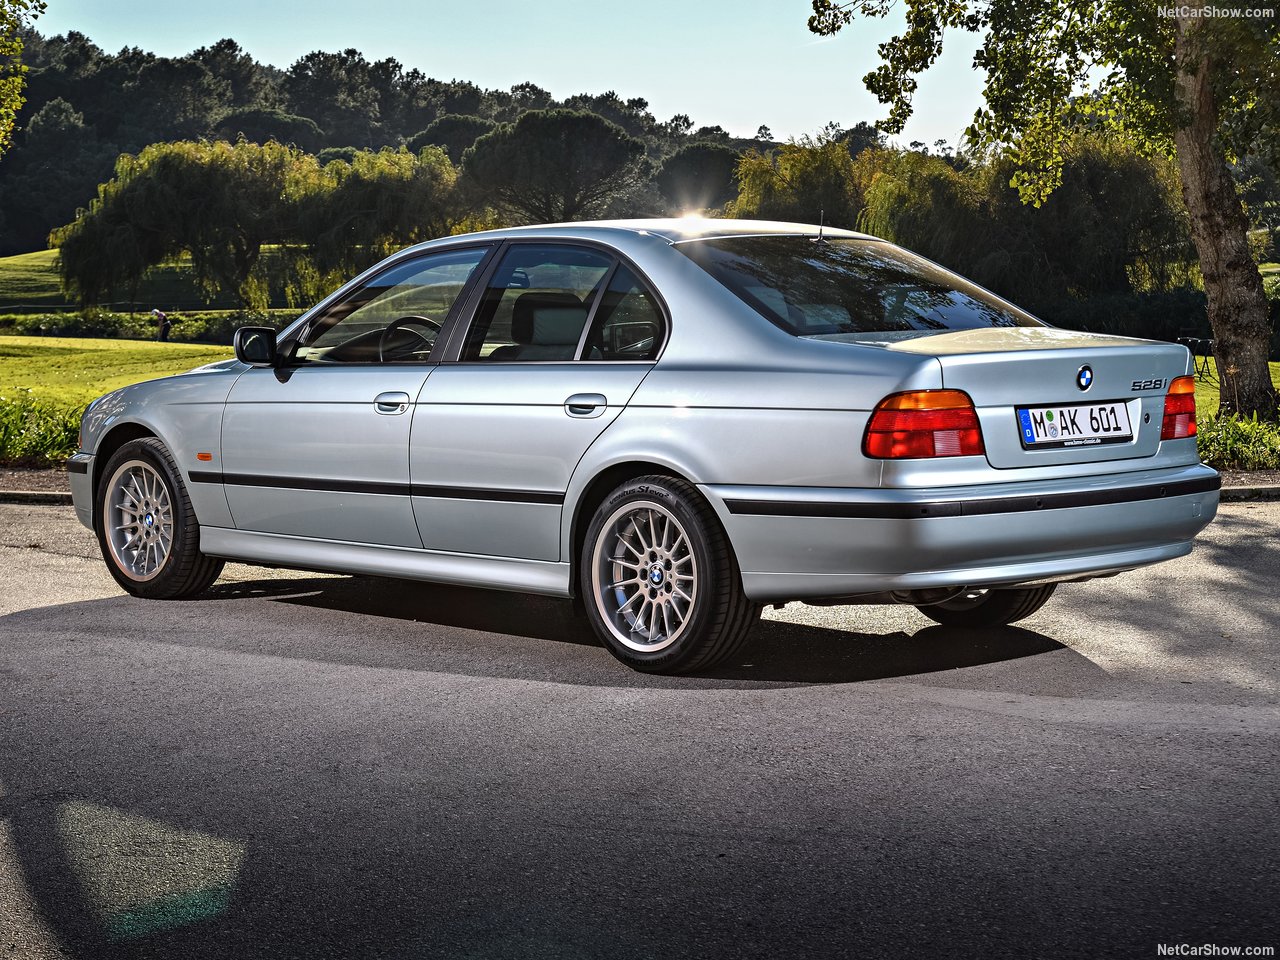 Stunning BMW 5 Series (E39) - A Classic Beauty